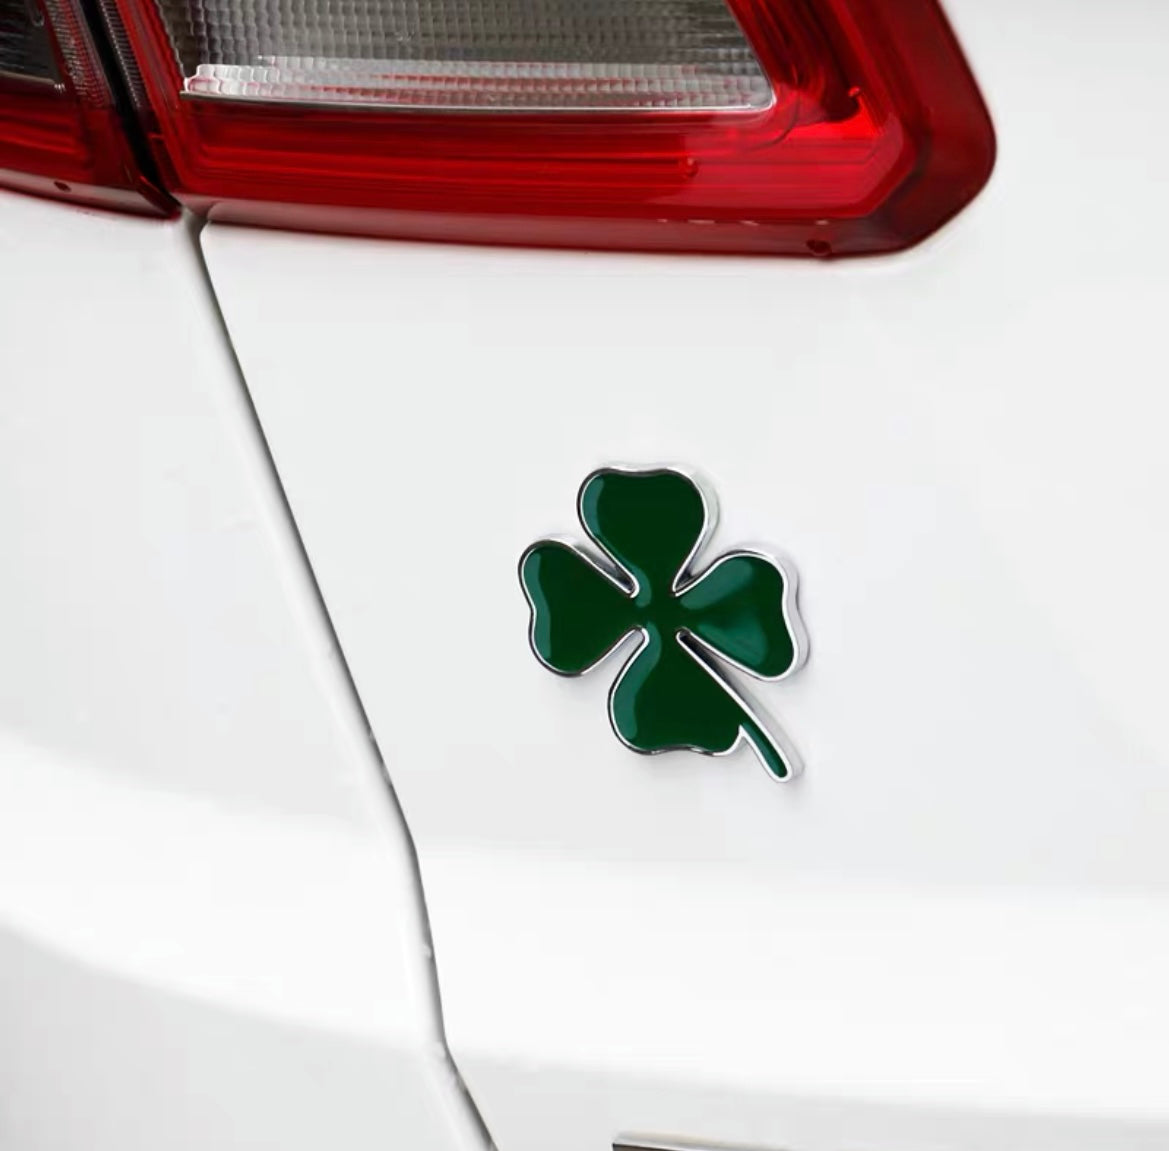 Four Leaf Clover Car Sticker Myst Auto